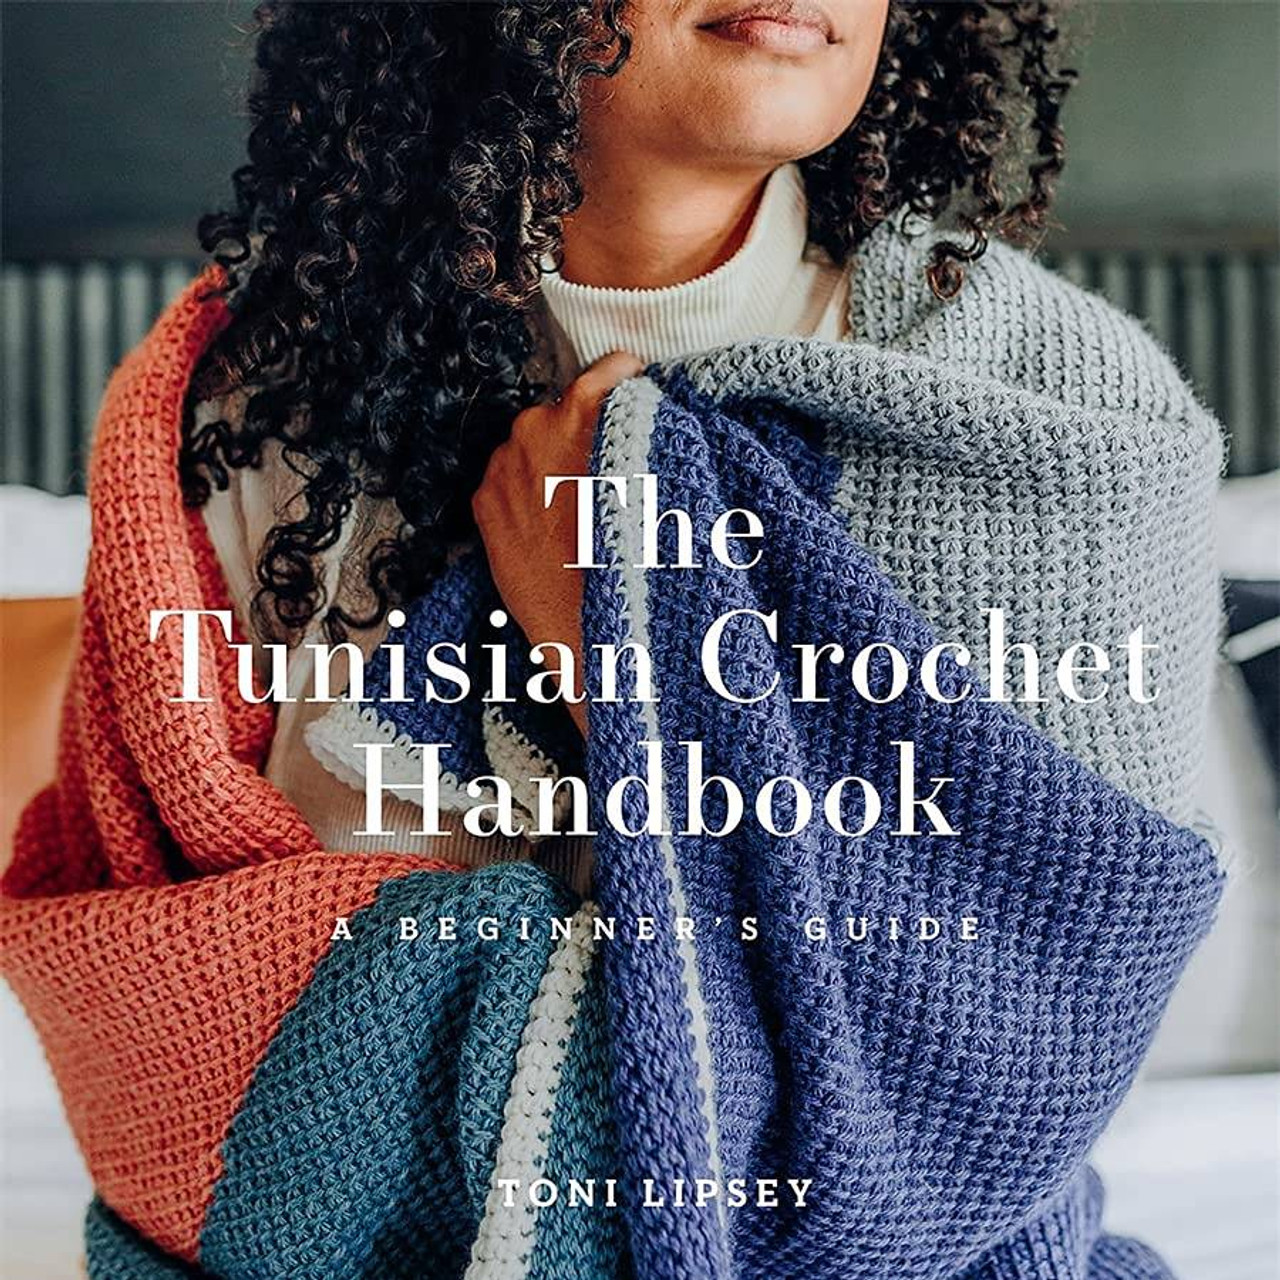 Tunisian Crochet Workshop: Complete Crochet Books of modern Tunisian  Crochet Stitch Designs, Crochet book includes 61 Stitch Patterns Including  Photo